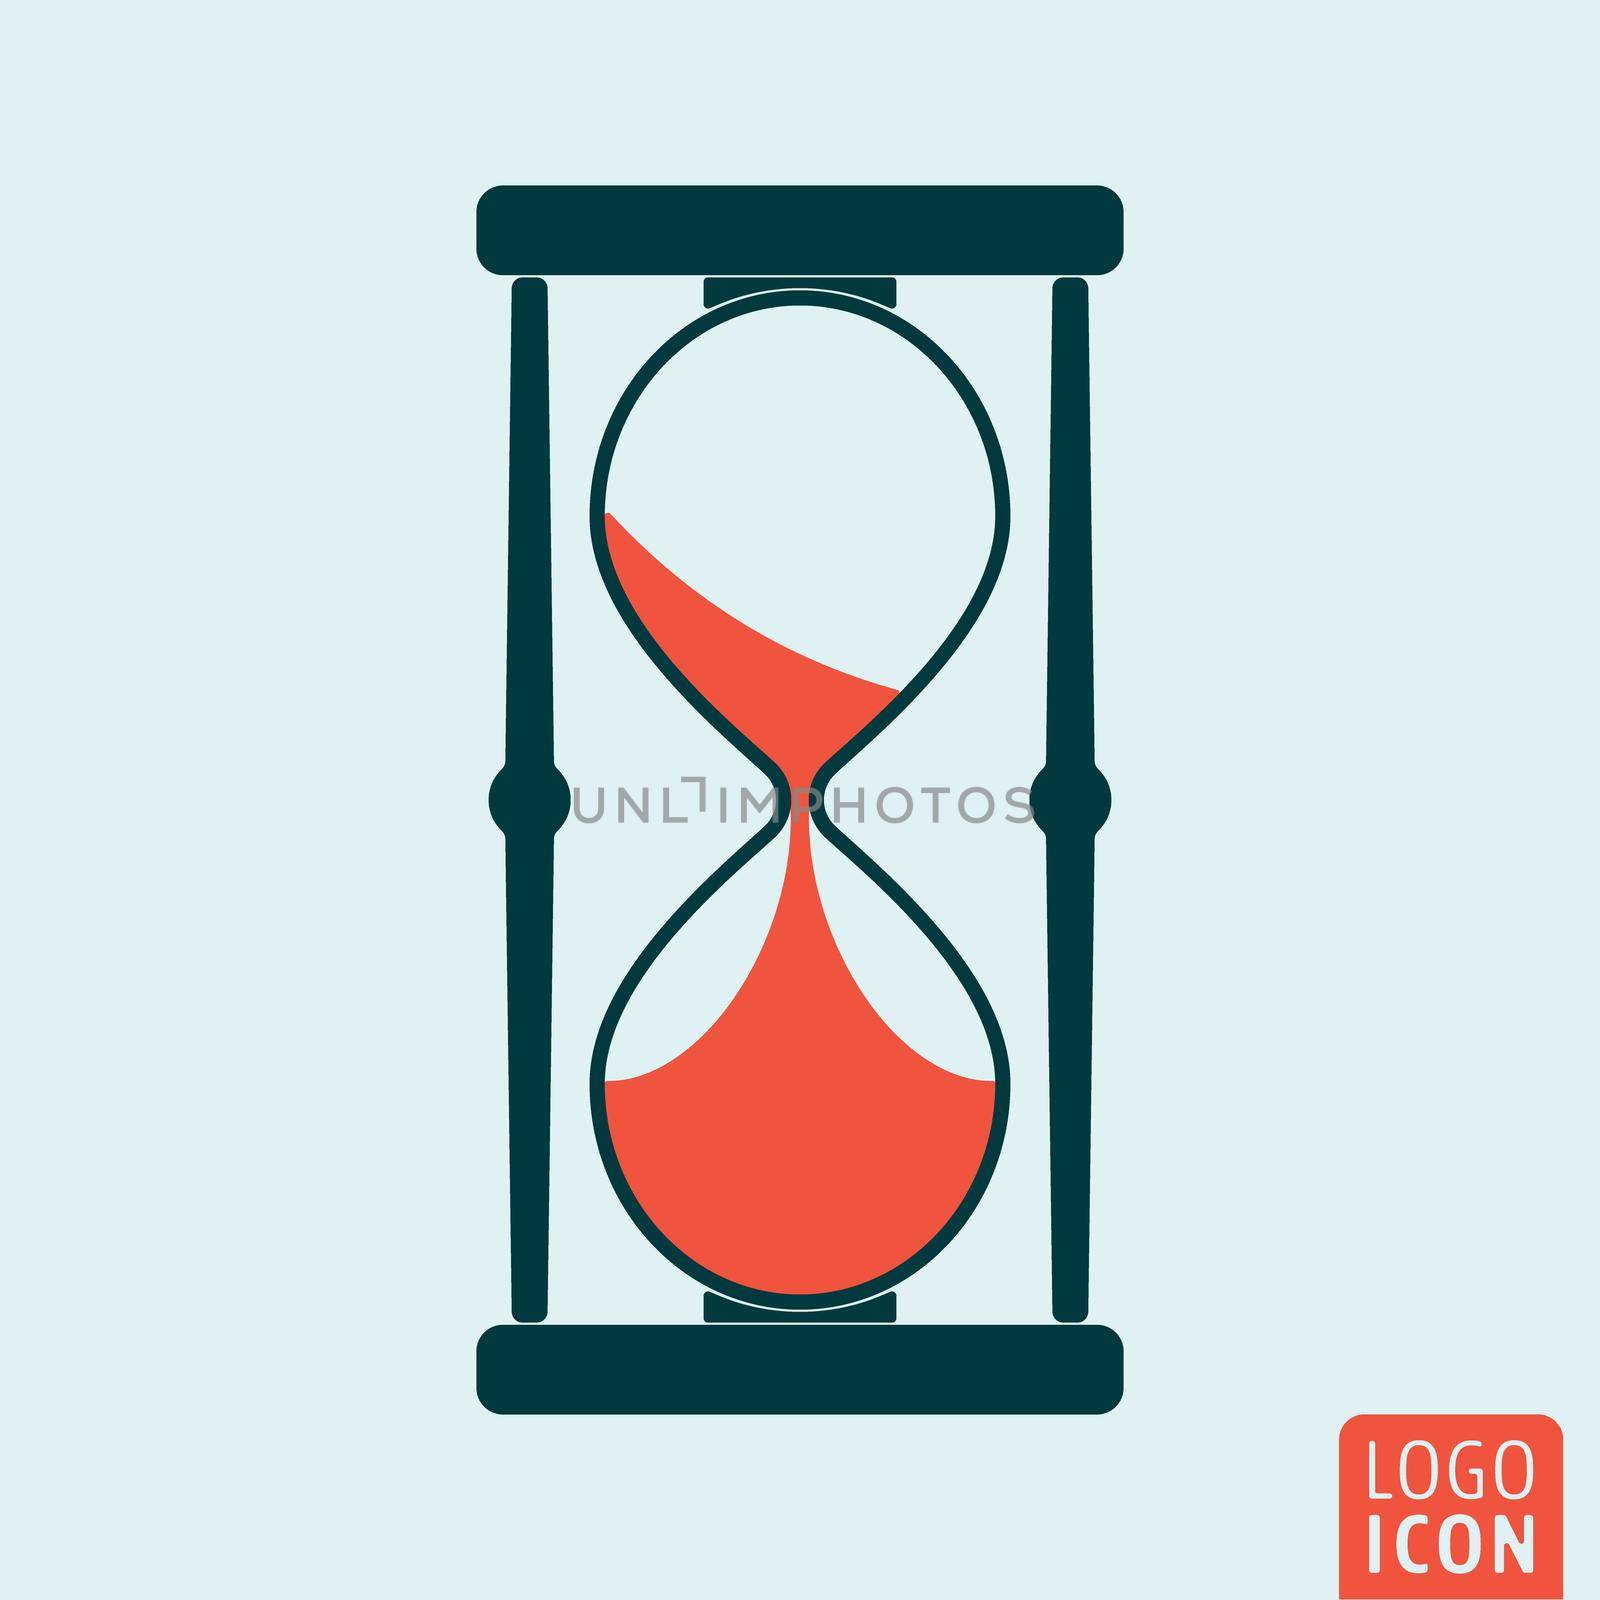 Sand clock icon. Hourglass or sandglass symbol. Vector illustration.